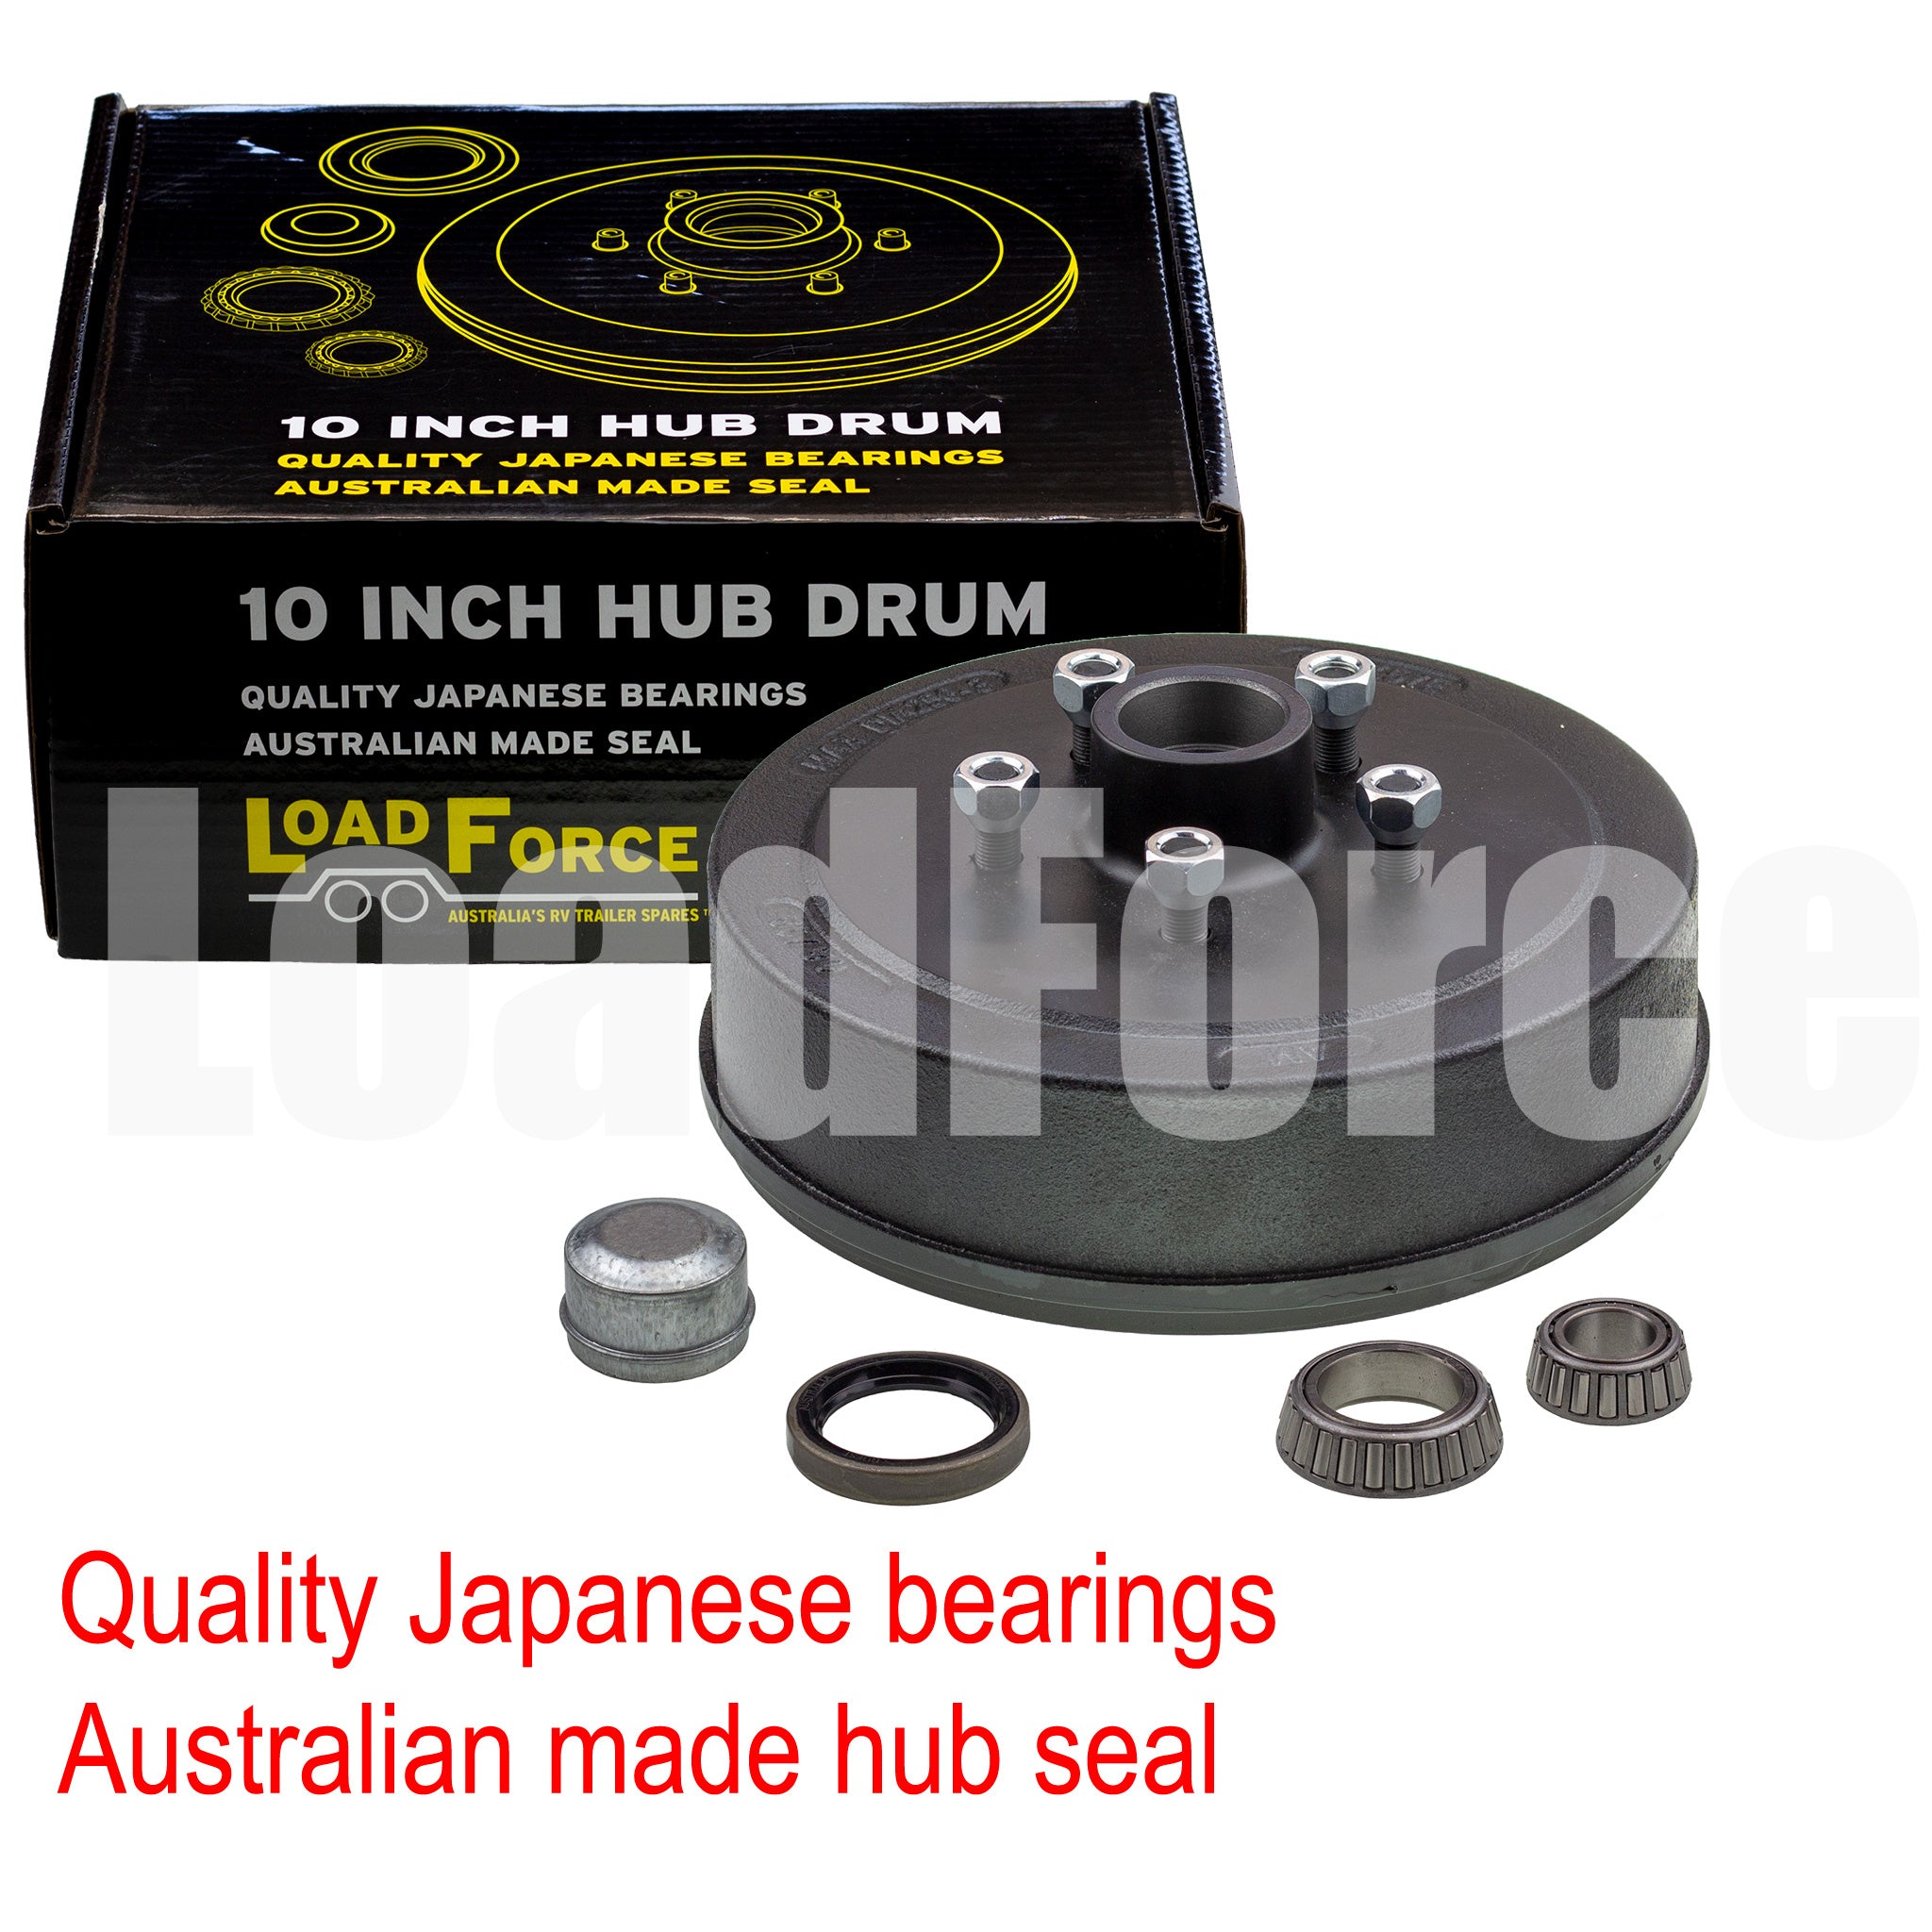 LoadForce hub drum 10 x 2.25 inch HT 5 stud with slimline (Ford) bearing